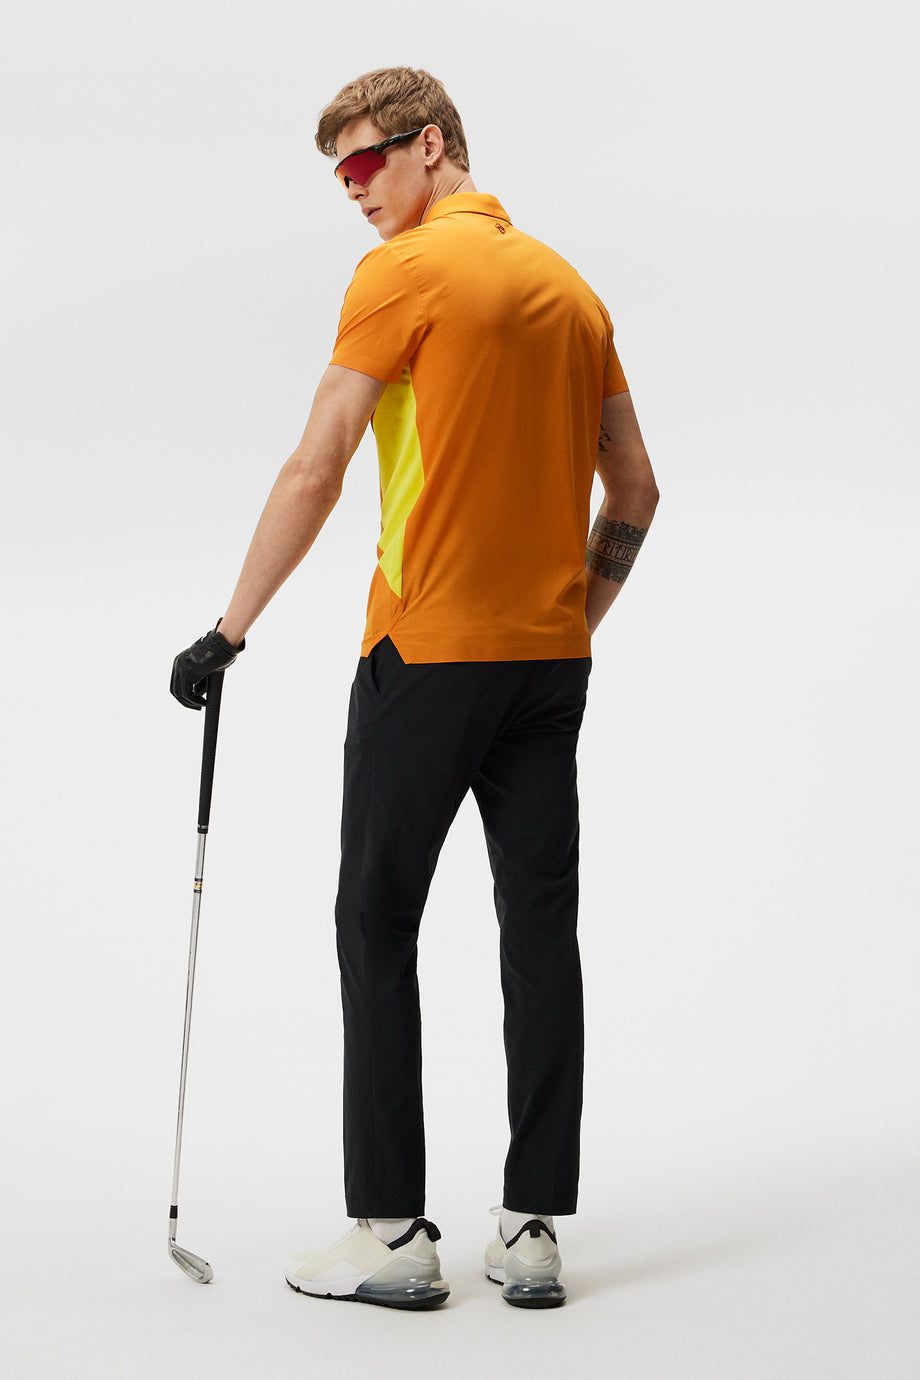 Chris Regular Fit Polo / Russet Orange